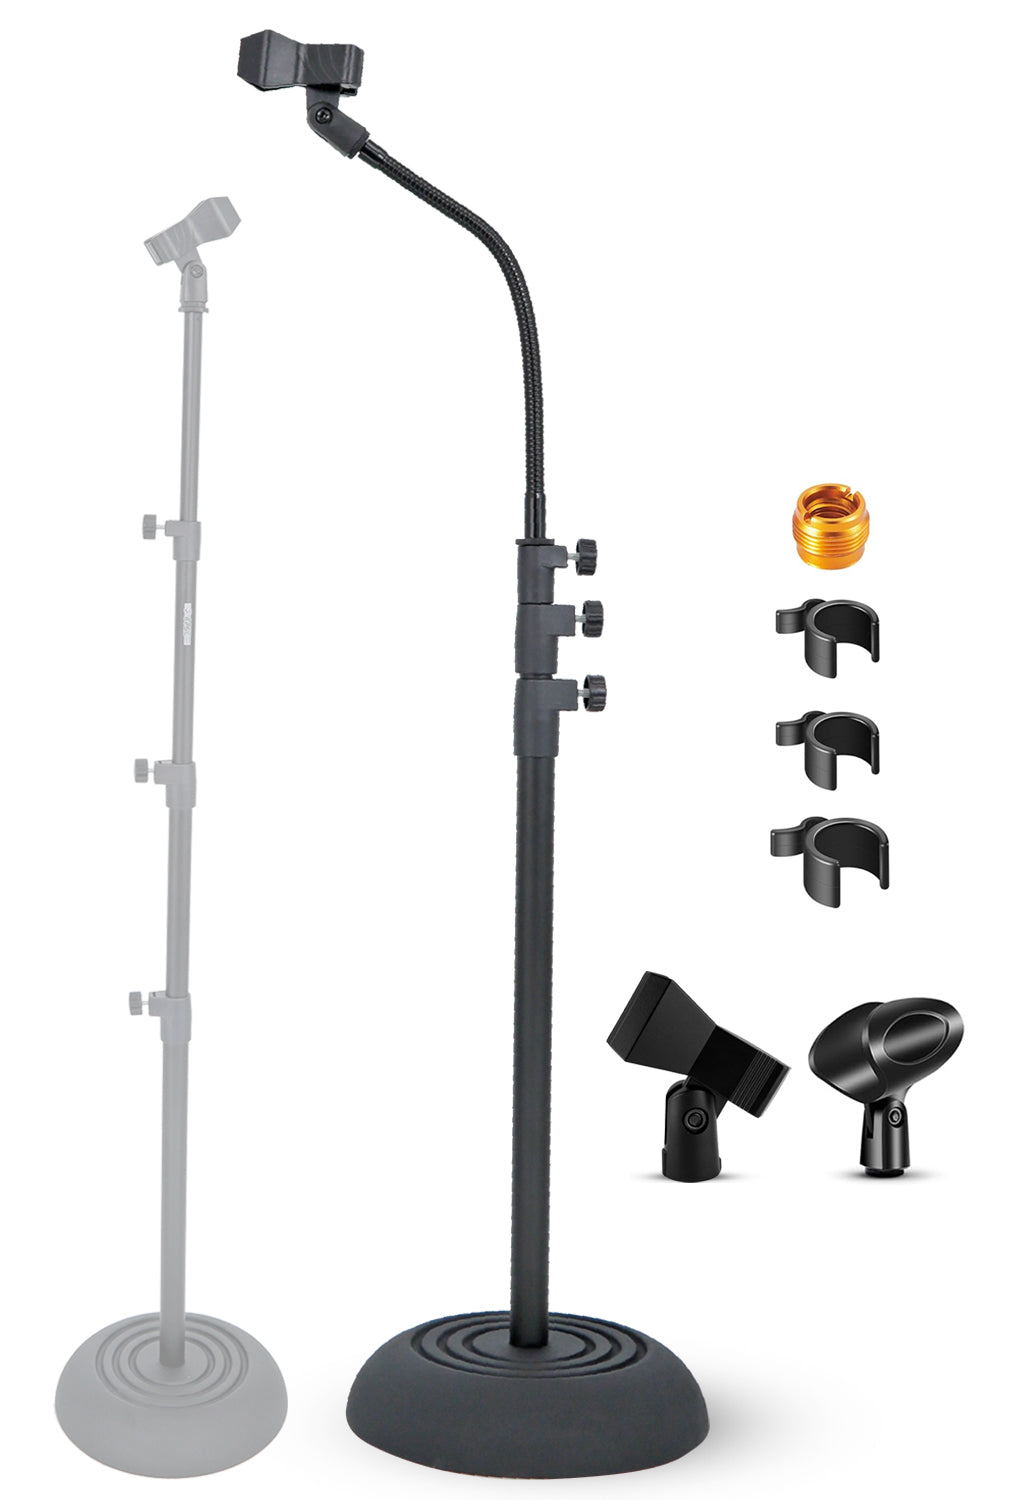 5Core Mic Stand Floor Adjustable Universal Heavy Duty Gooseneck Microphone Stands Round Base Soporte De micrófono